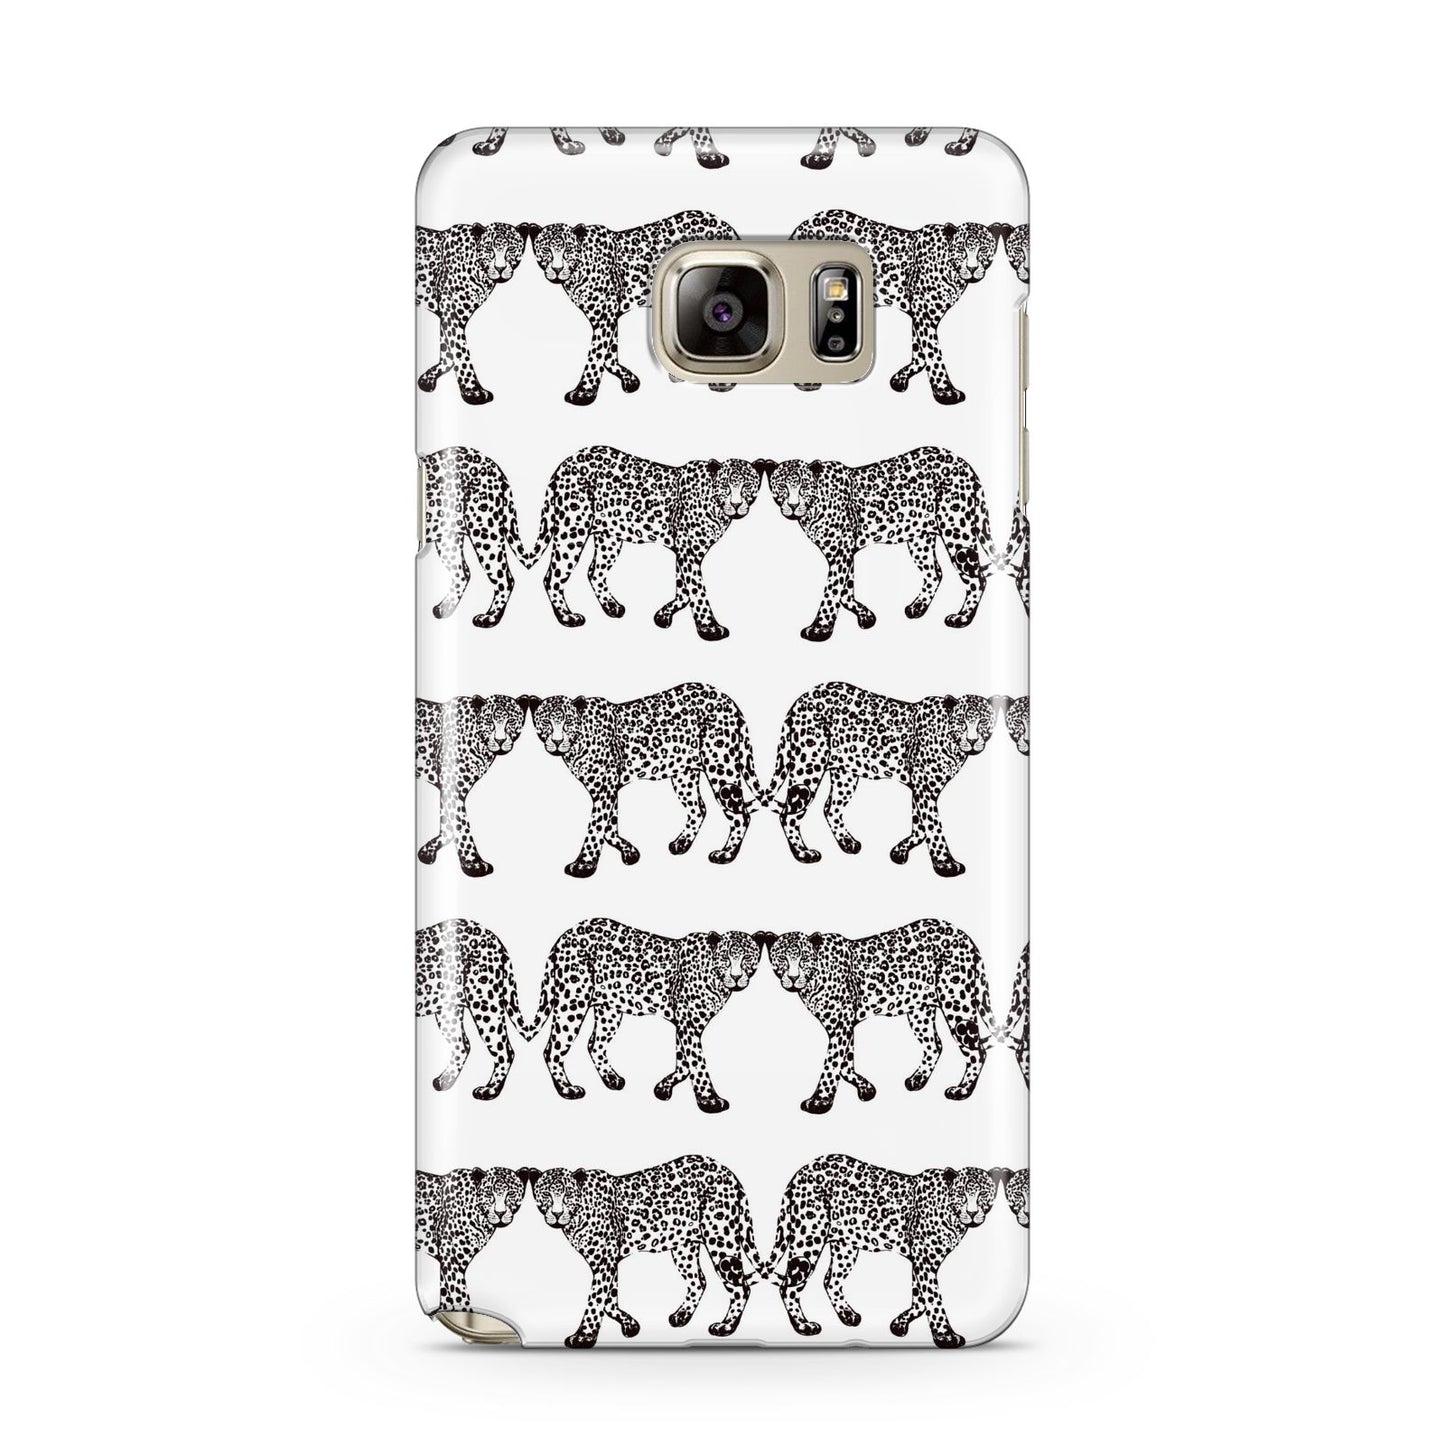 Monochrome Mirrored Leopard Print Samsung Galaxy Note 5 Case